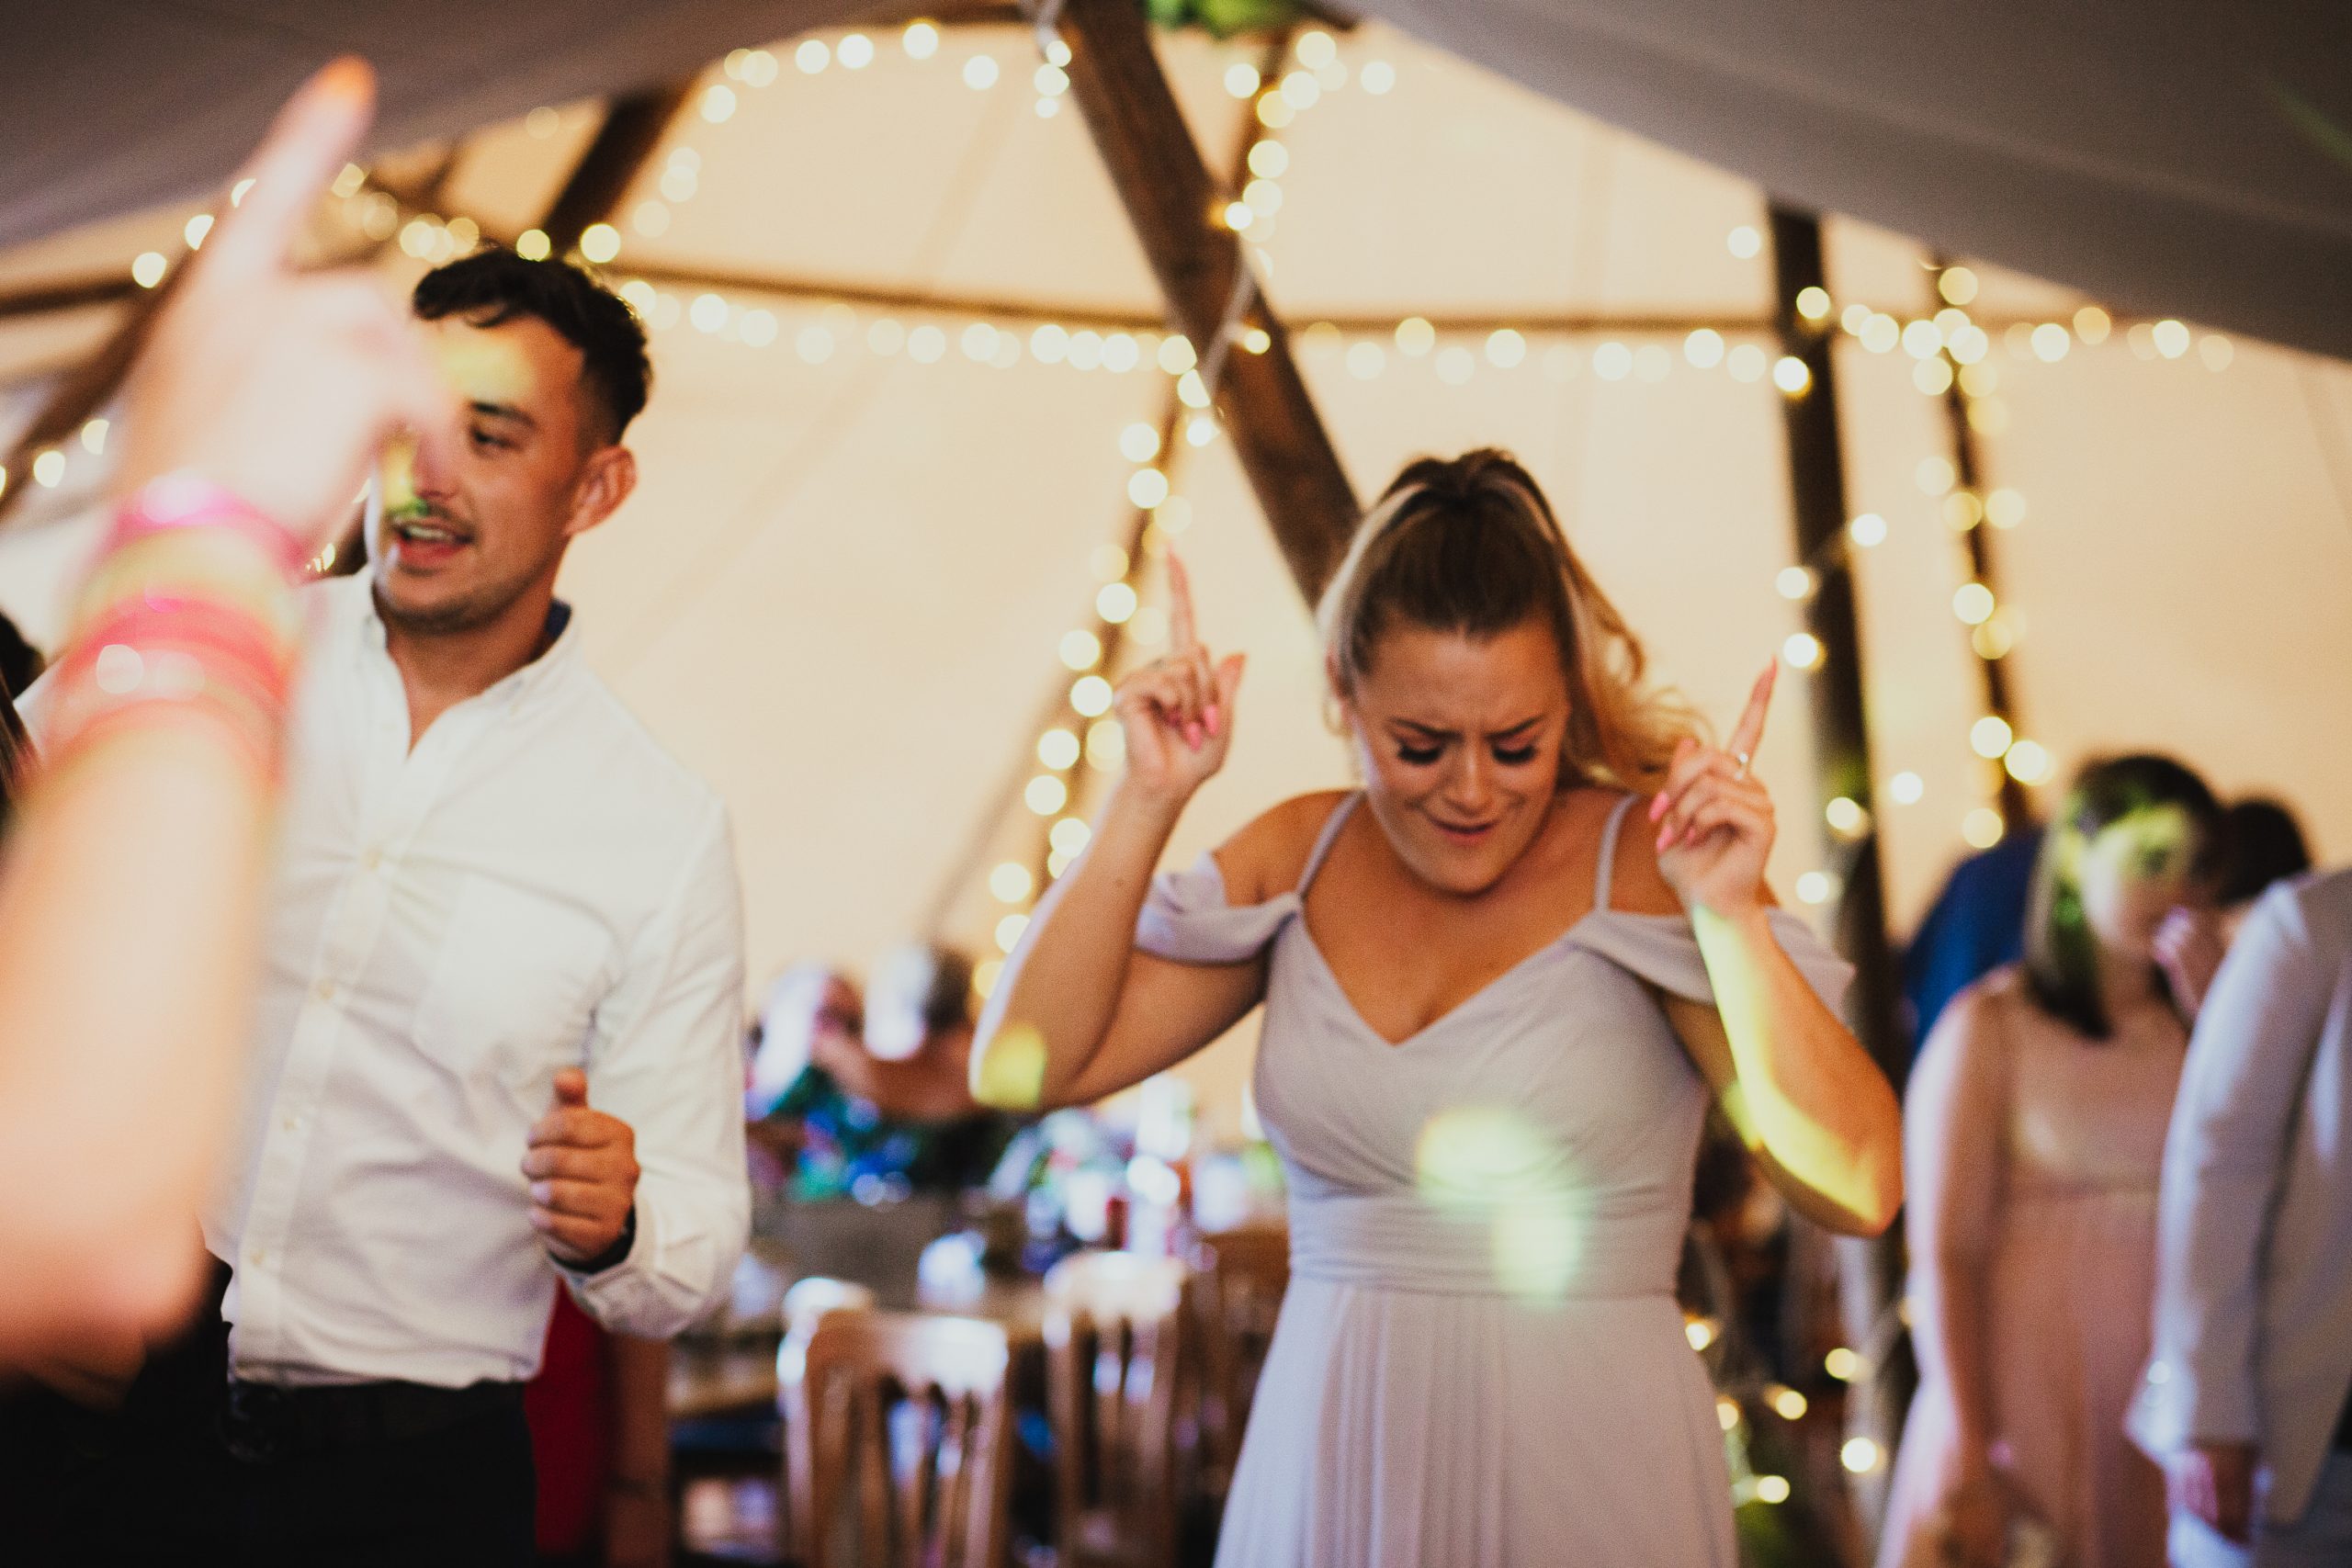 dancing in tipi at festival wedding